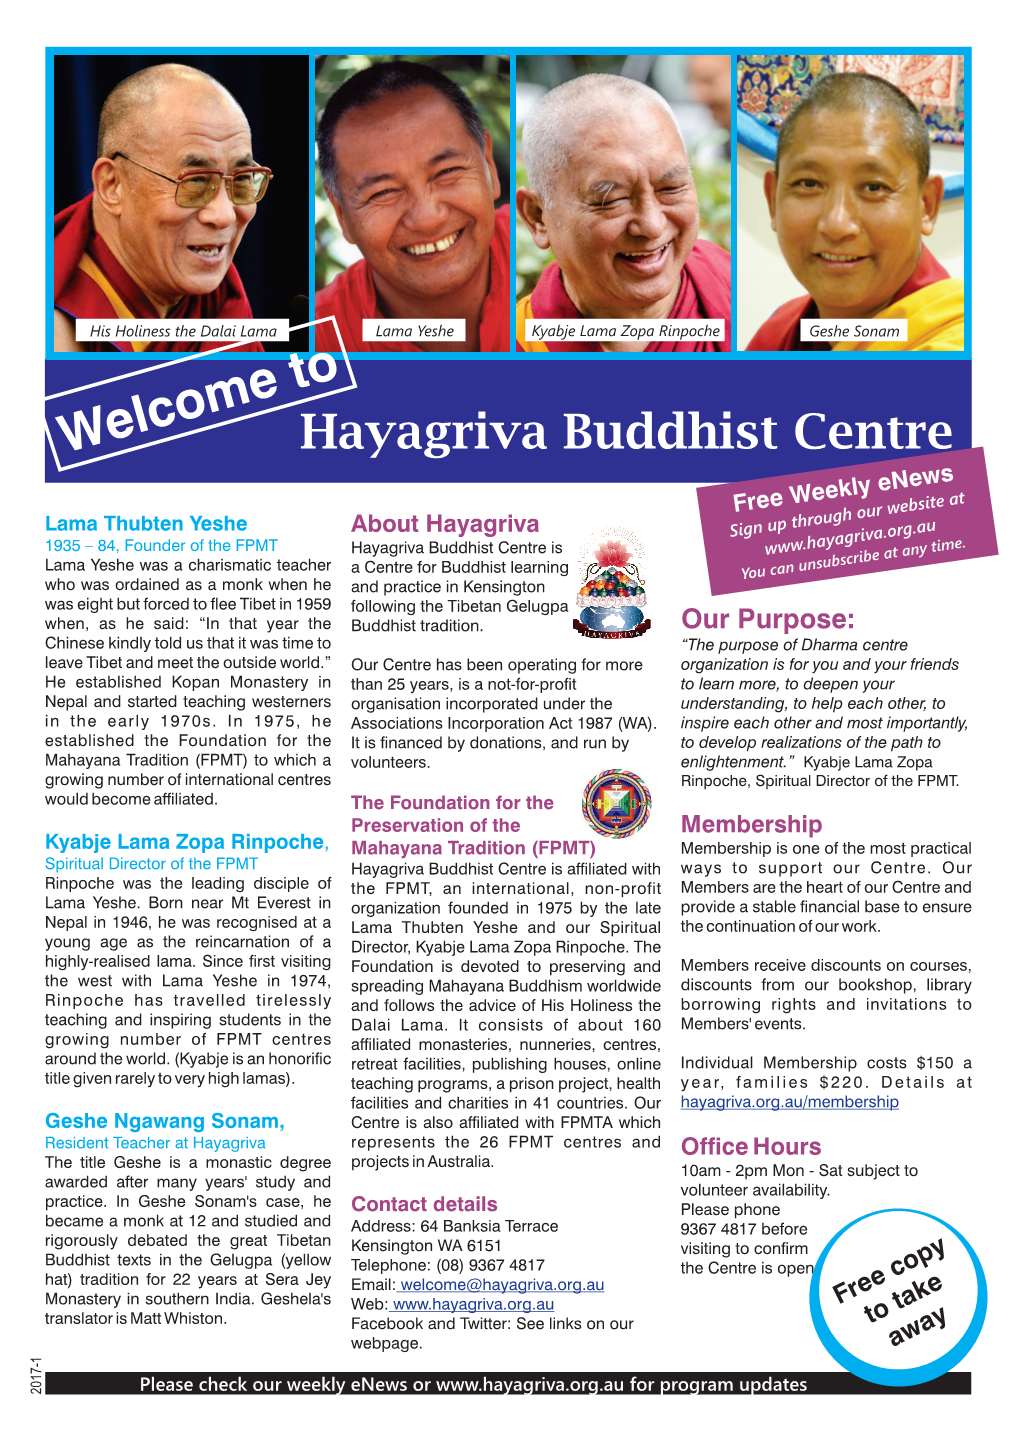 Hayagriva Buddhist Centre